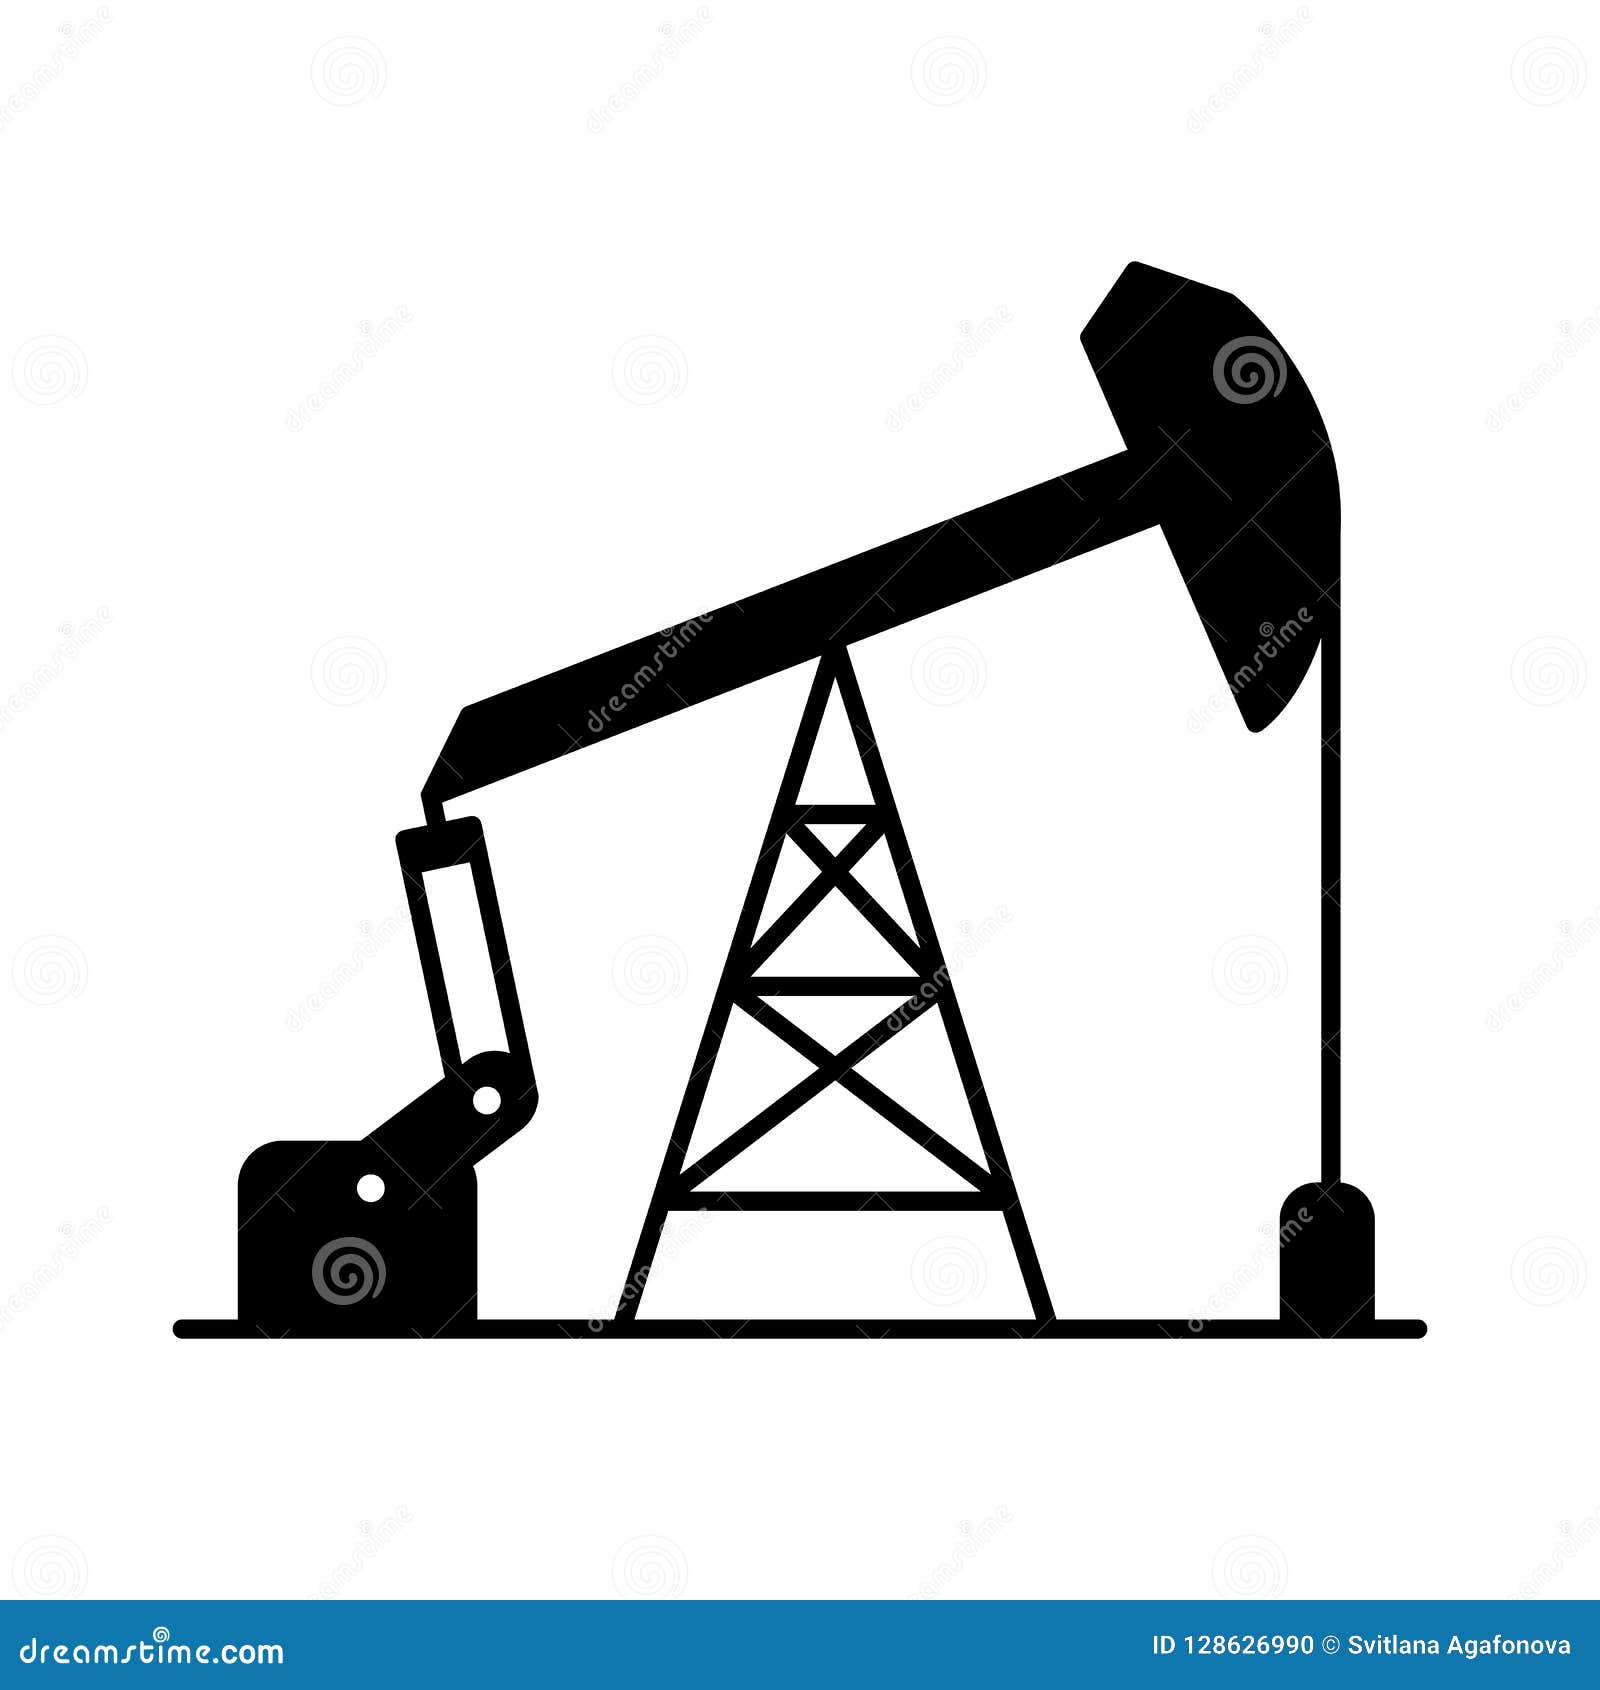 graphic black flat  sucker rod pump icon; oil pump logo for petroleum industry